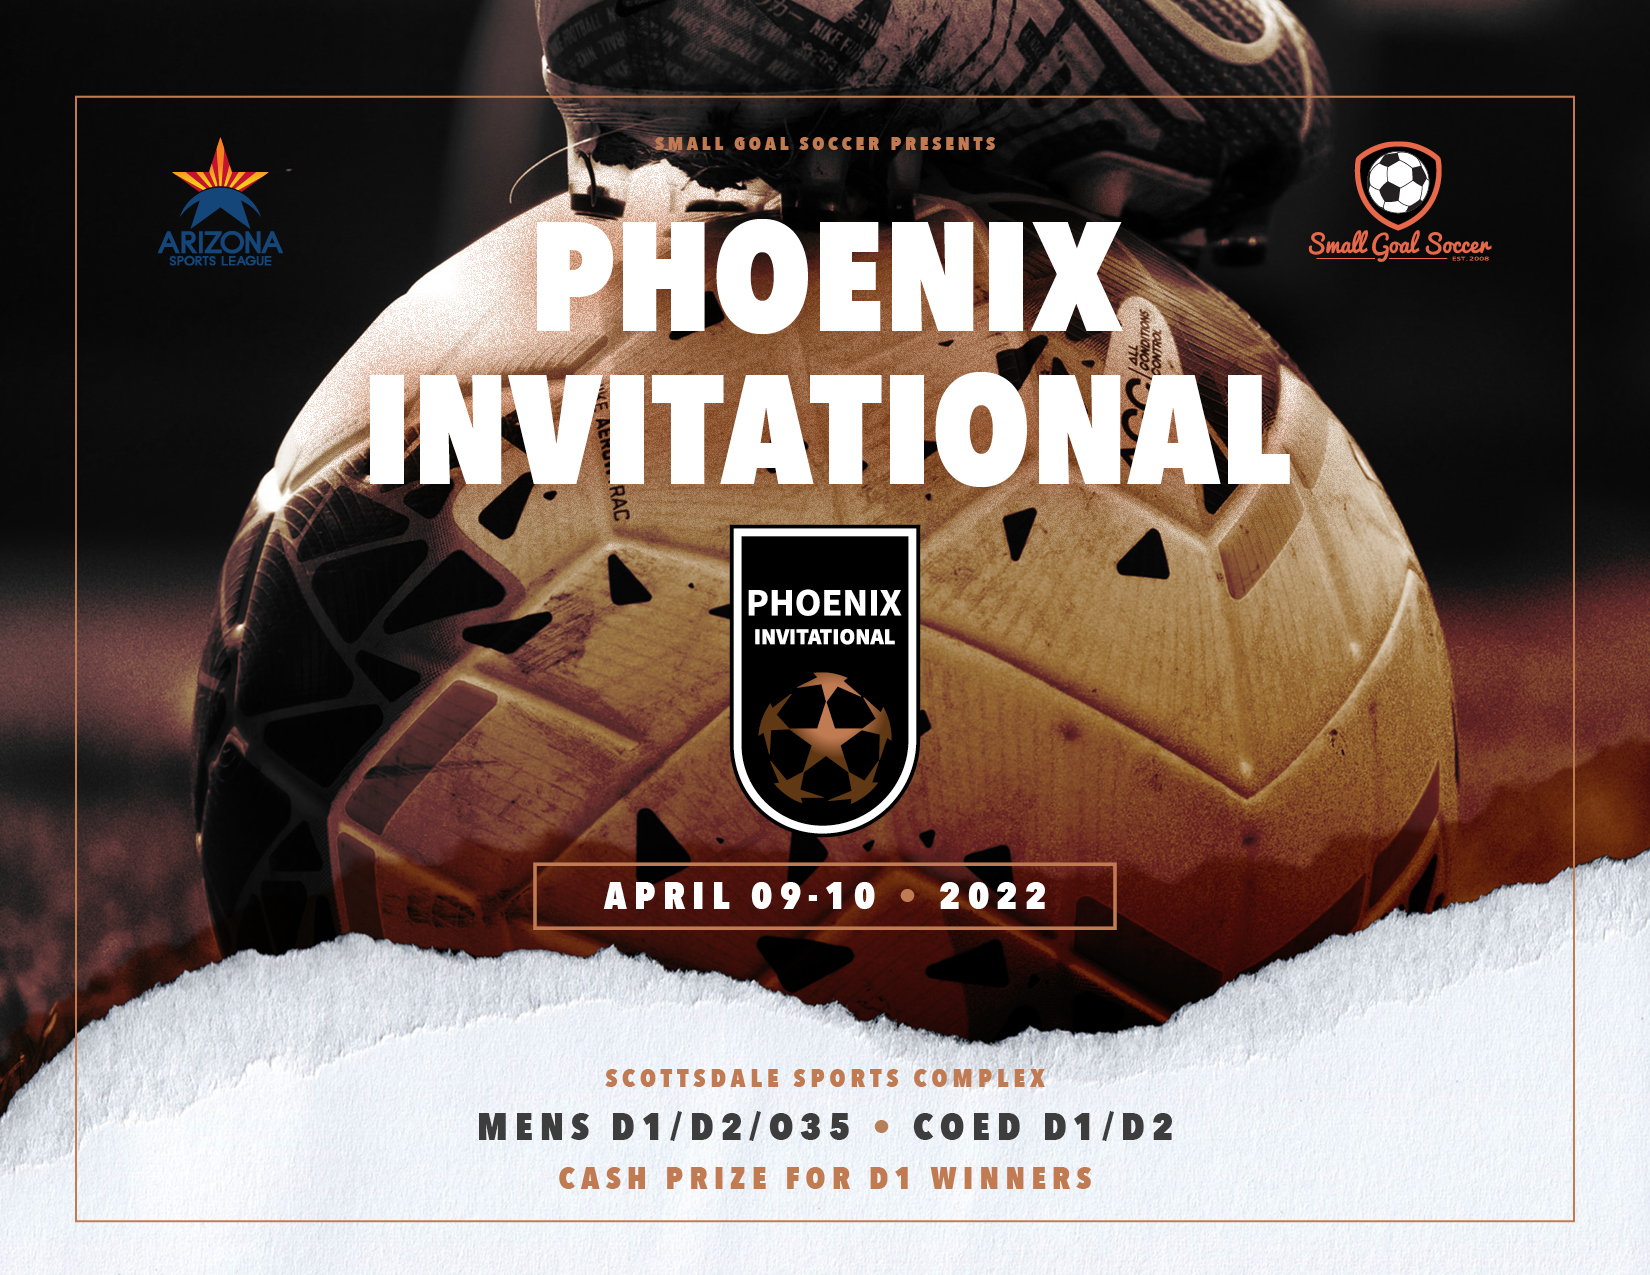 Phoenix Adult Soccer Invitational Scottsdale, AZ Arizona Sports League